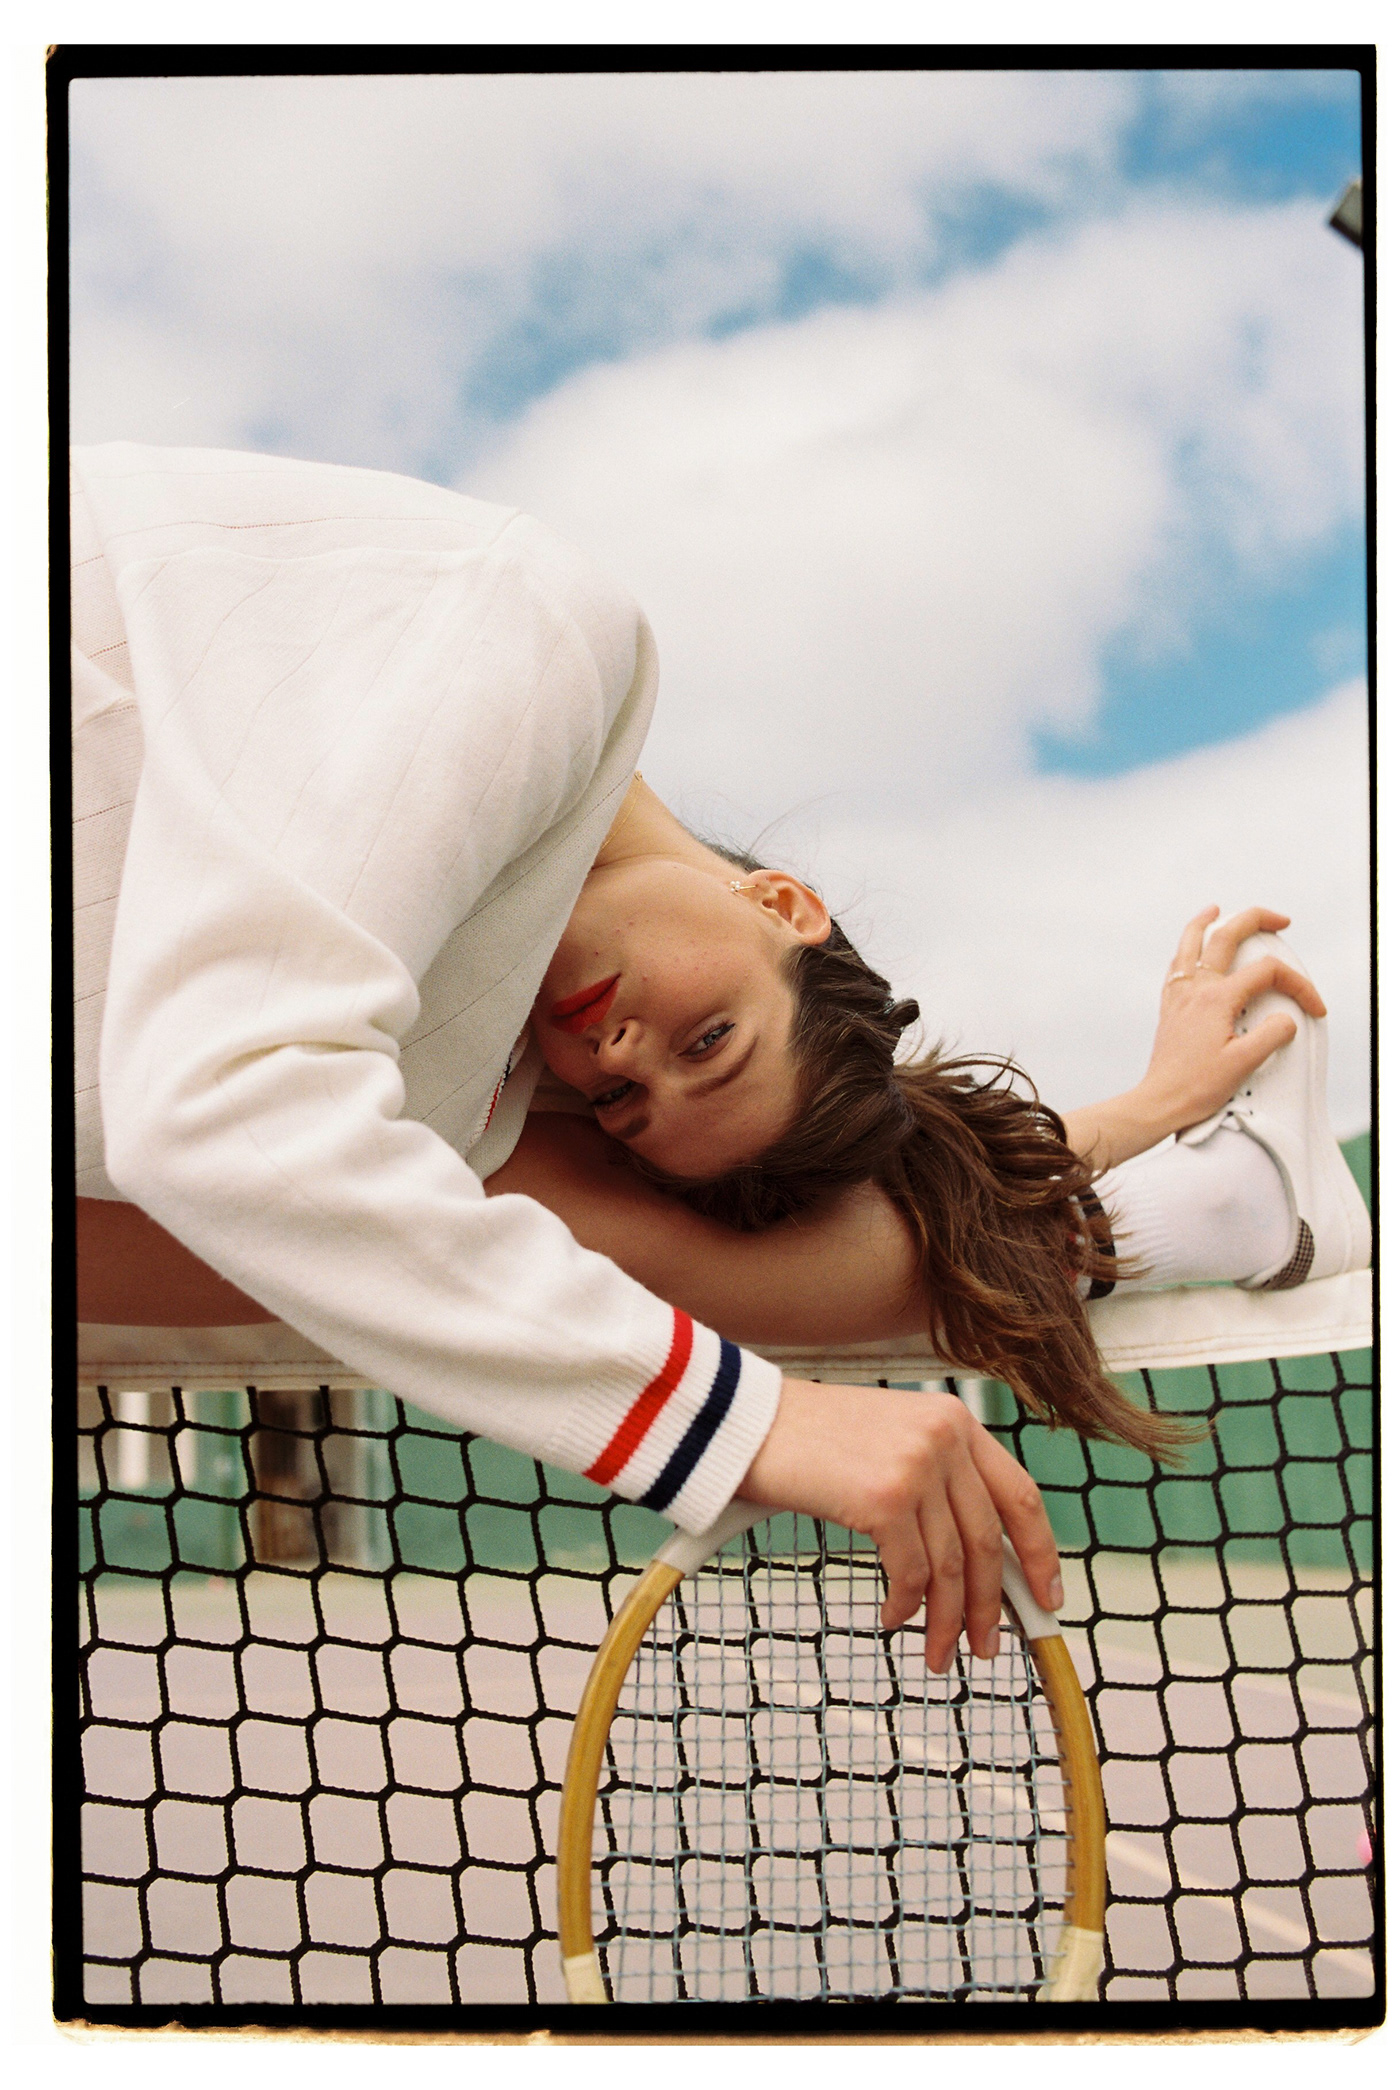 35mm 35mm film analog photography Analogue Film   film photography kodak portrait sports tennis